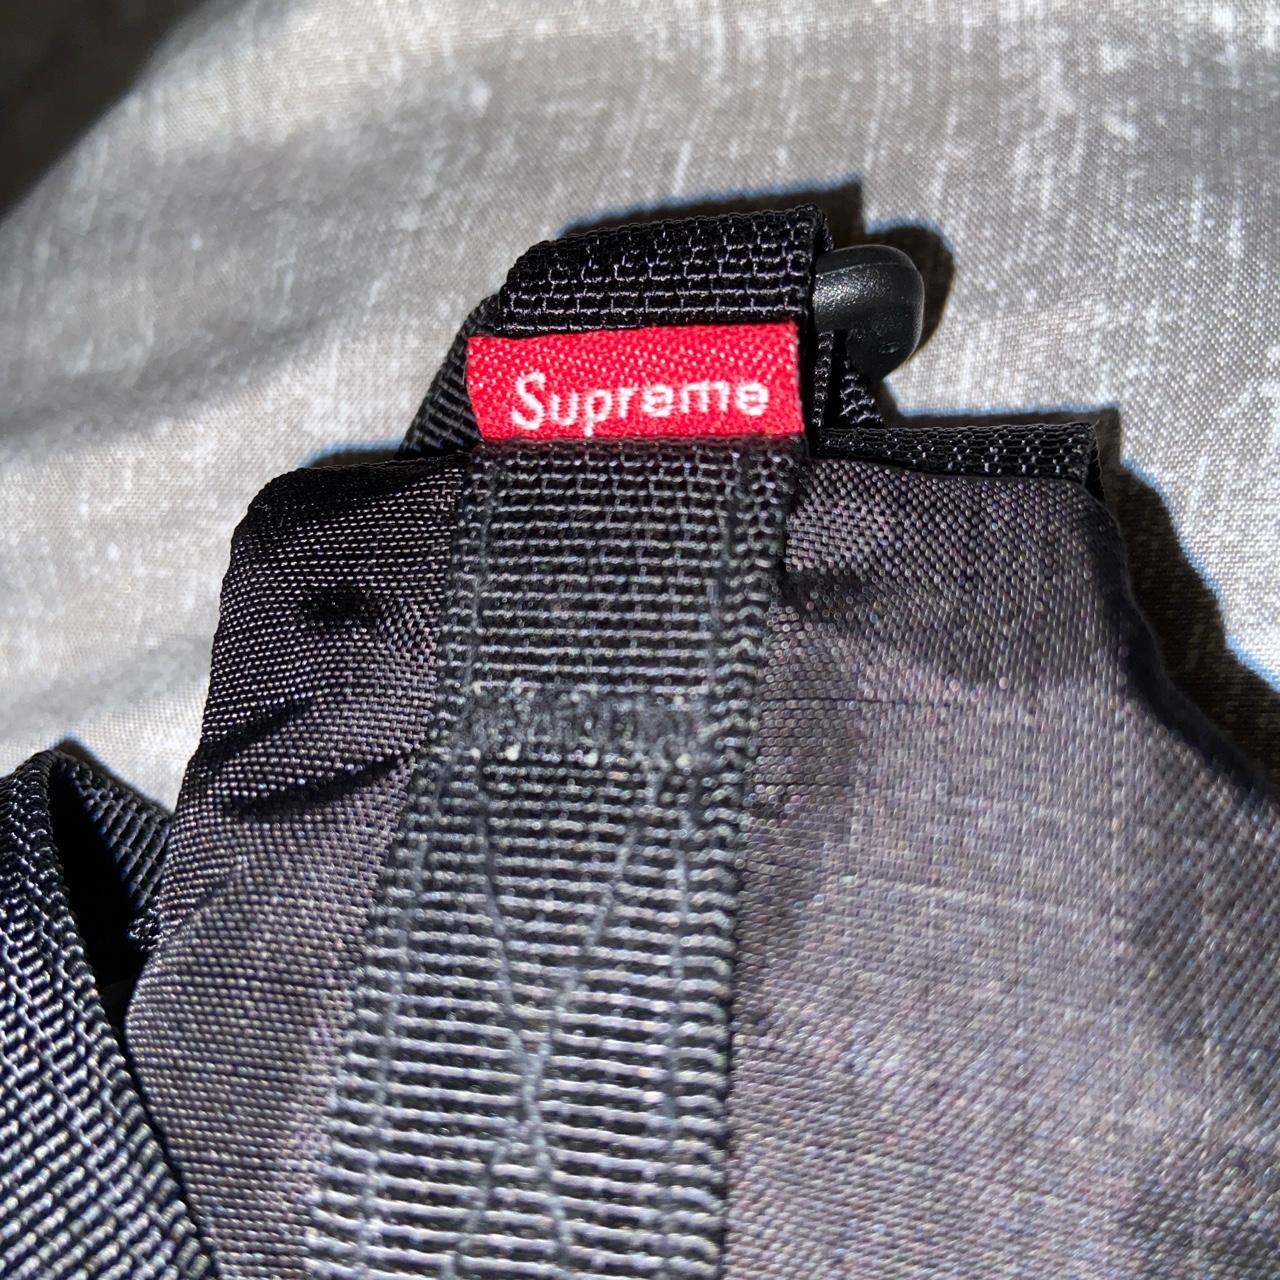 SS17 Supreme black Waist bag Cordura fabric